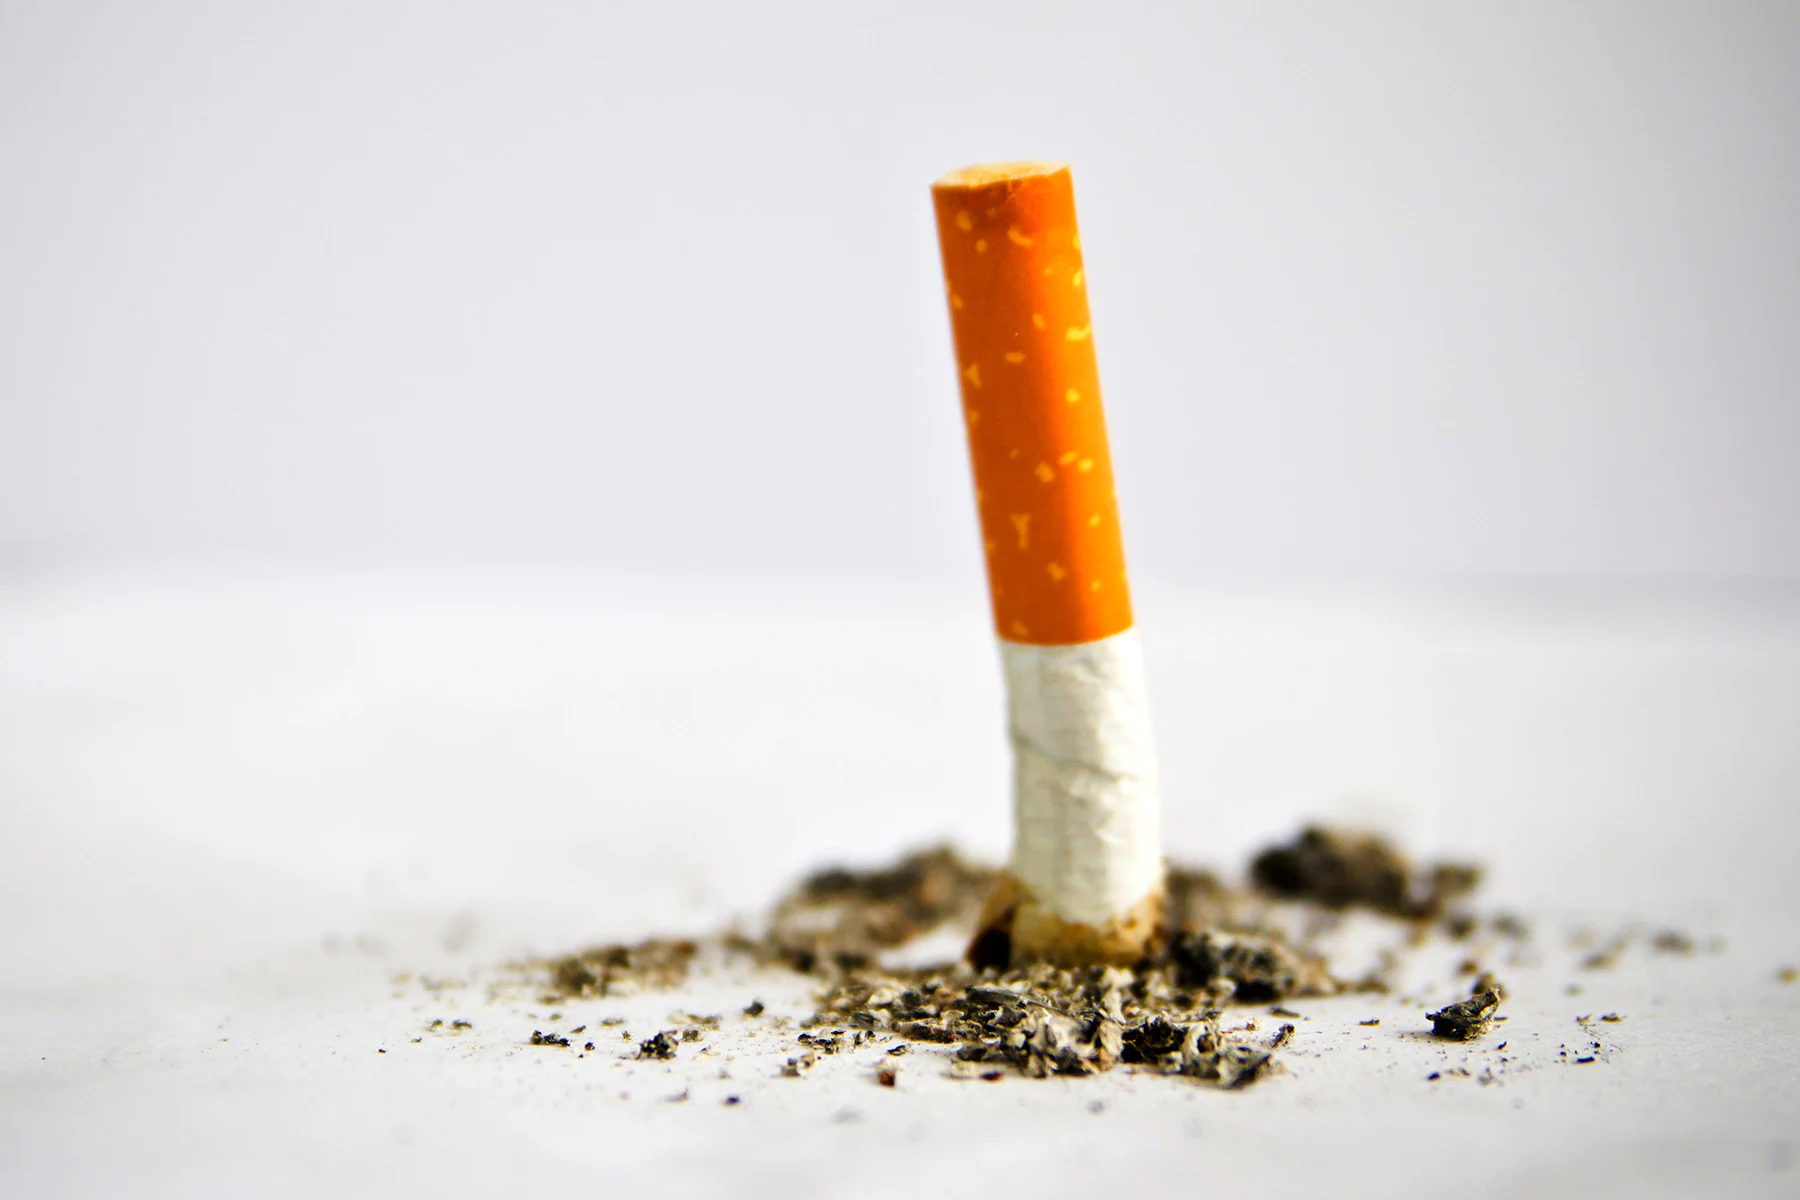 Raising Apt Age for Tobacco Cuts Teen Smoking